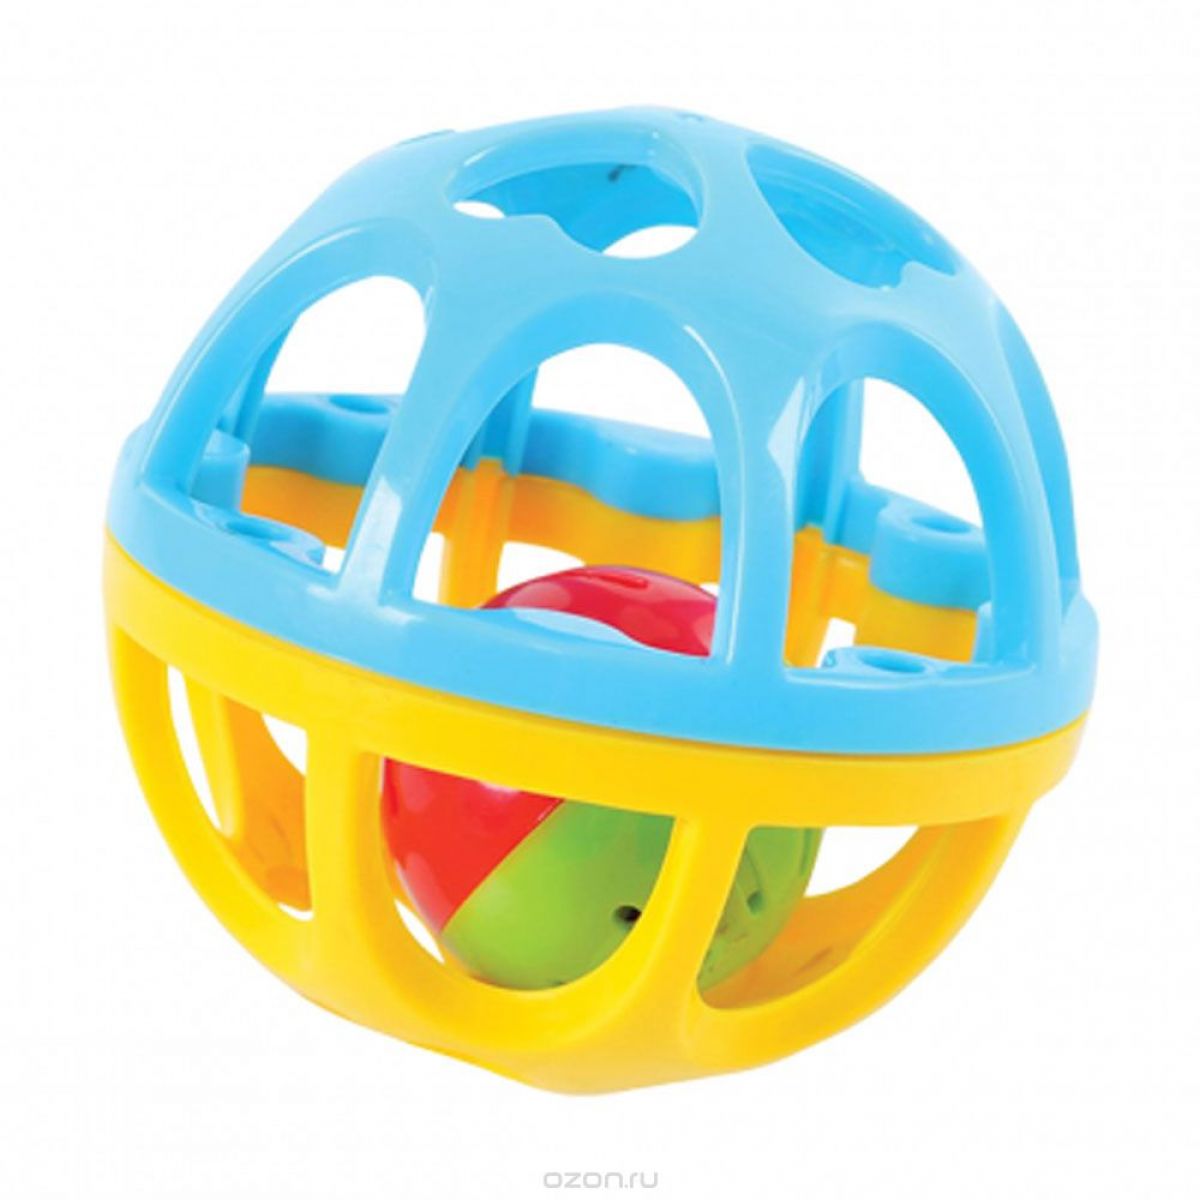 Playgo Chrastící míček - Modro-žlutá